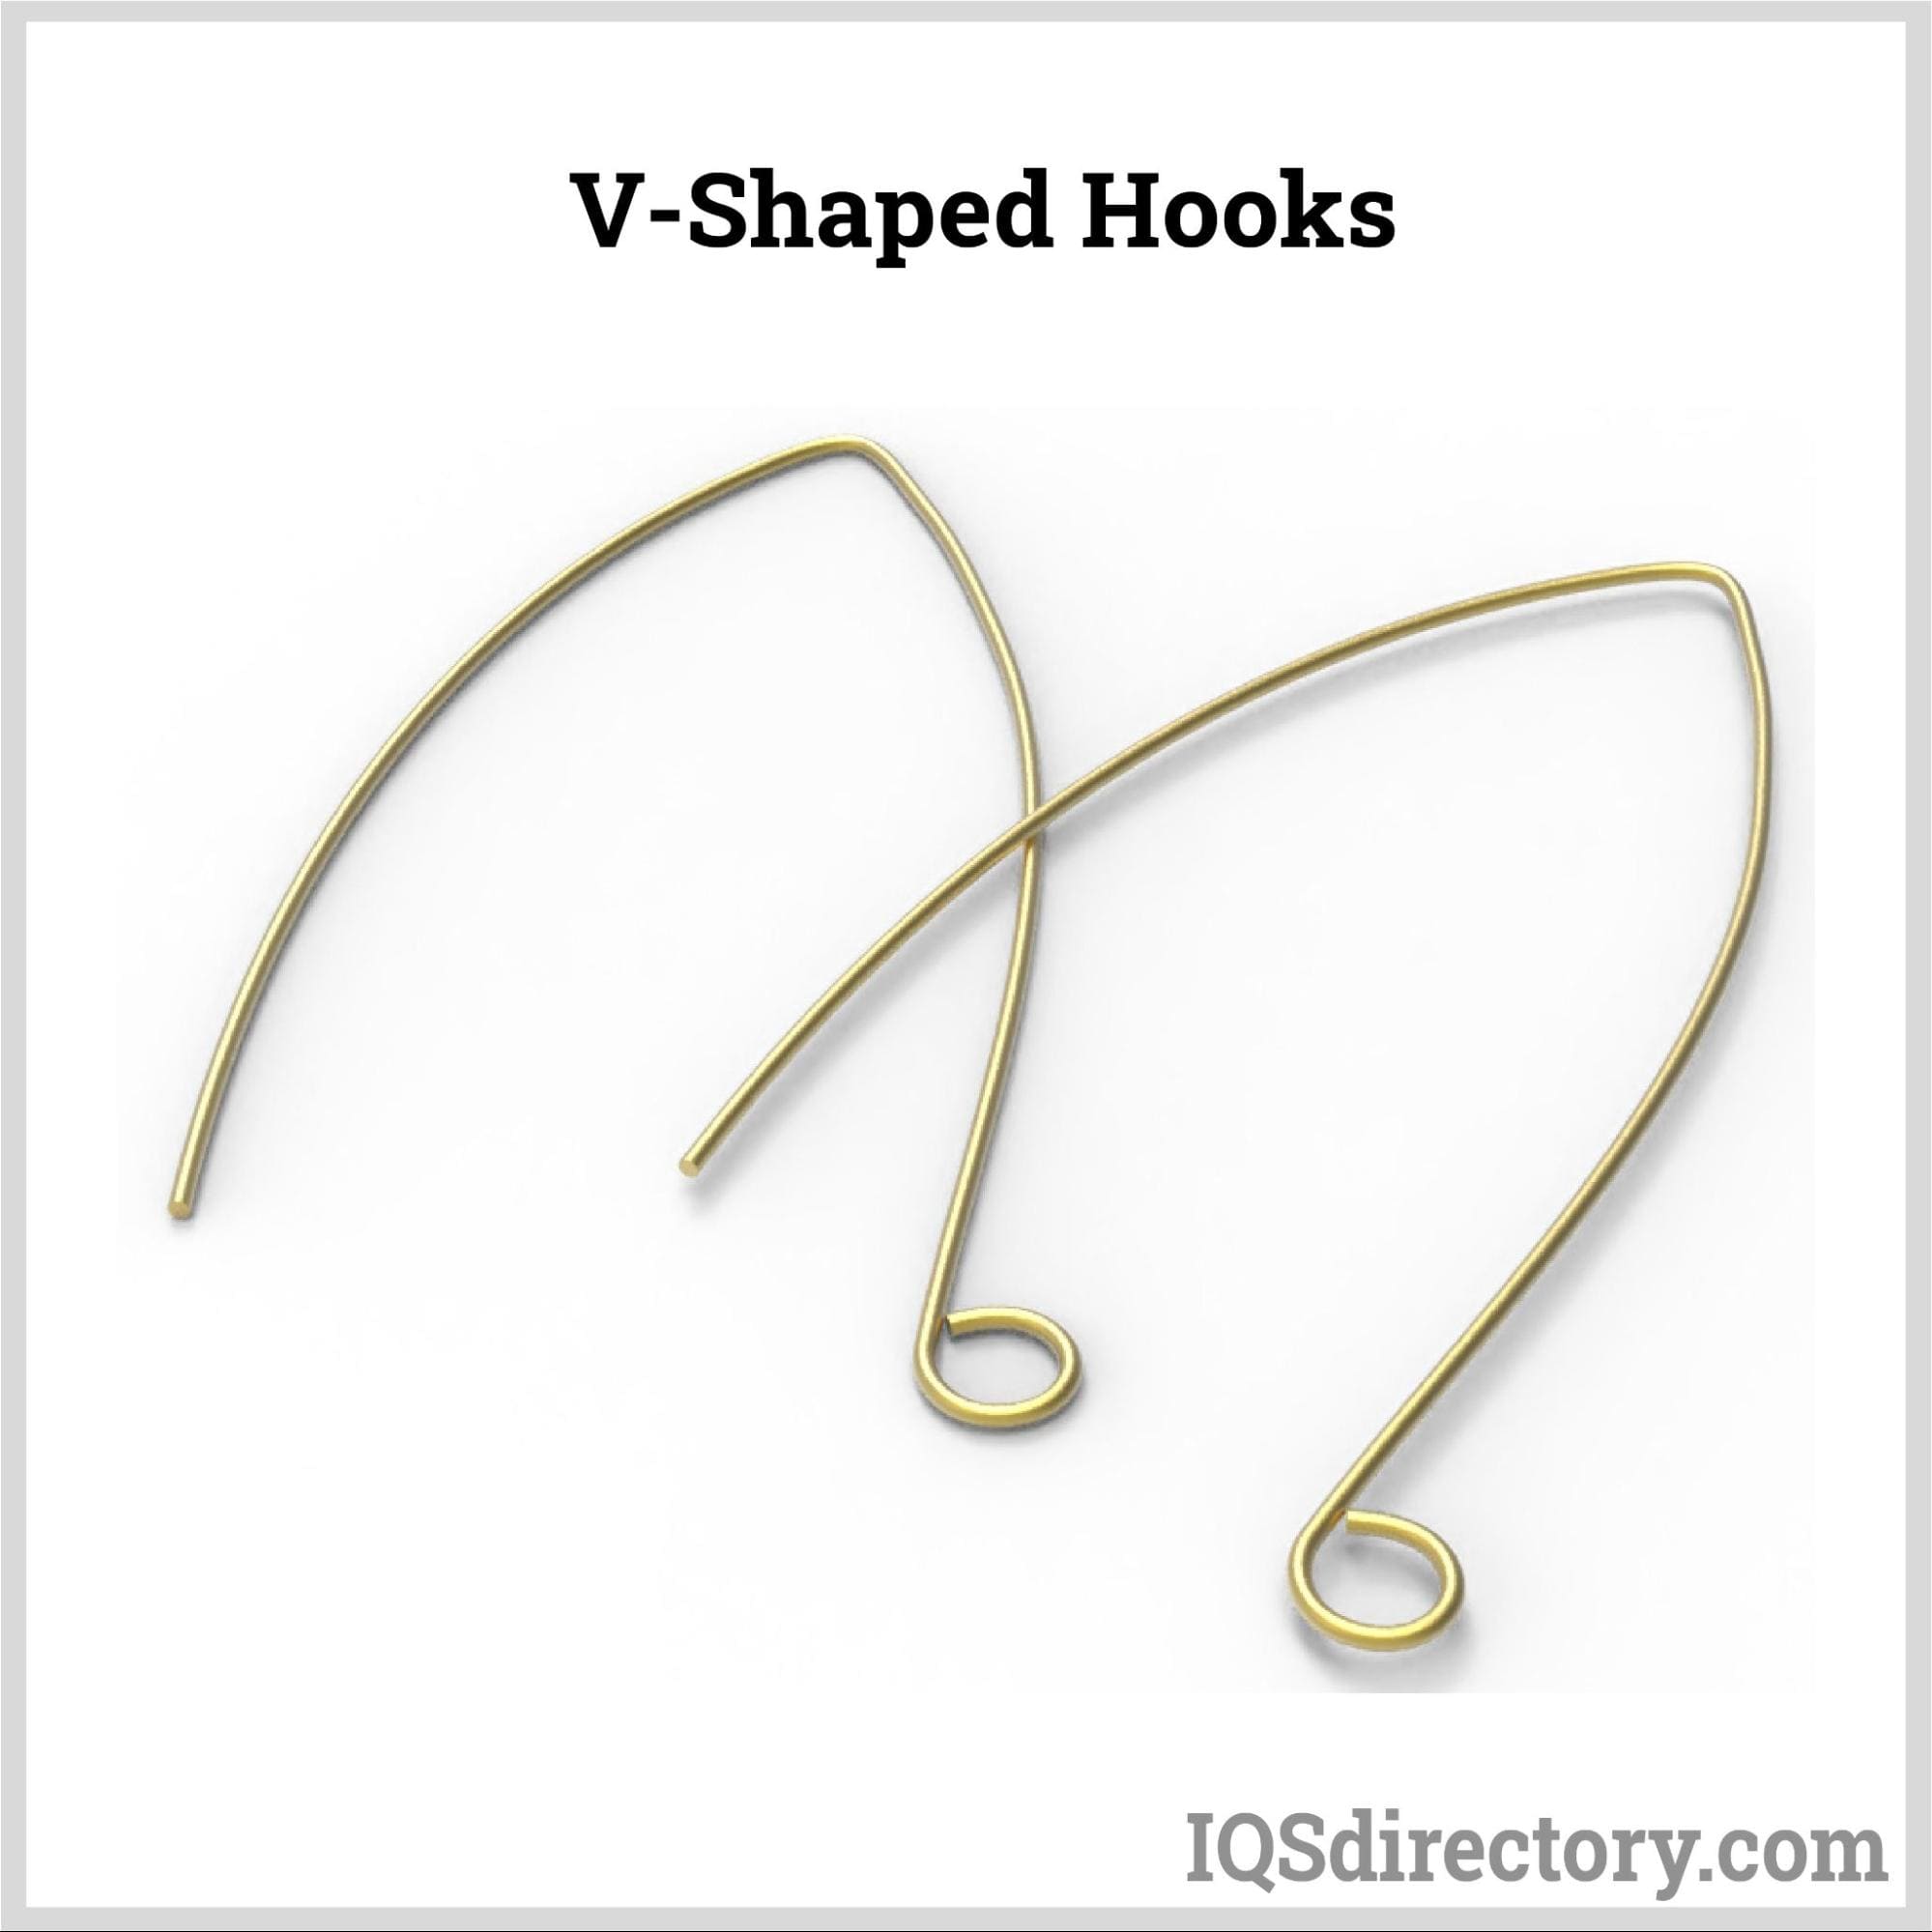 V-Shaped Hooks